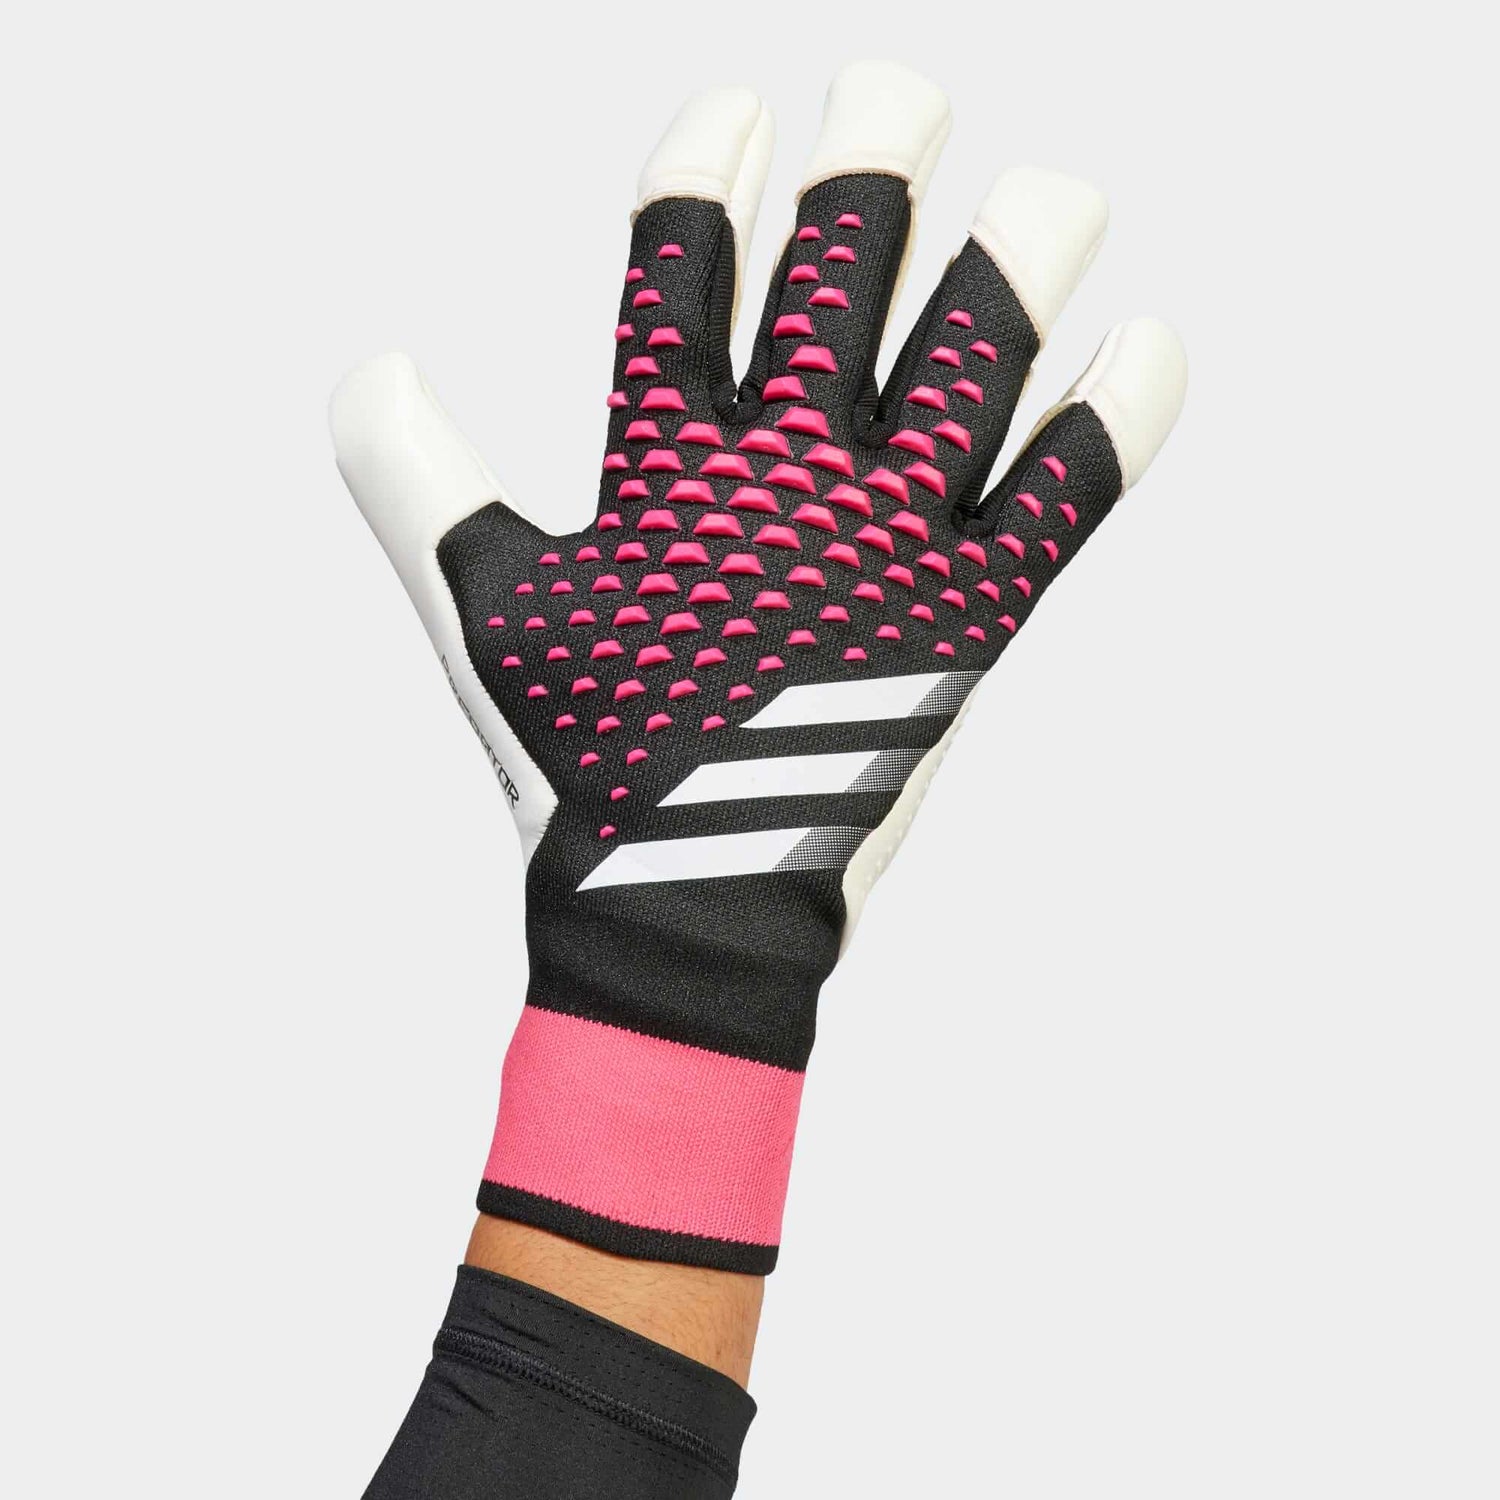 adidas Predator Pro Hybrid Goalkeeper Gloves - Black/Pink